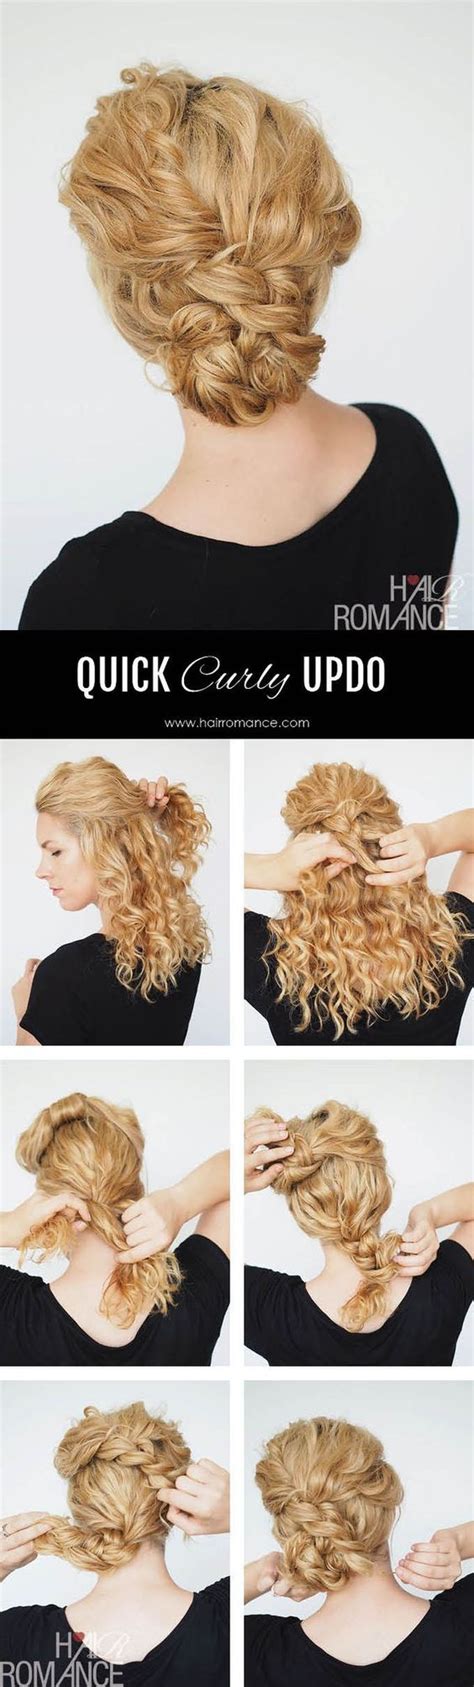 16 Easy Updo Hair Tutorials For The Season Pretty Designs